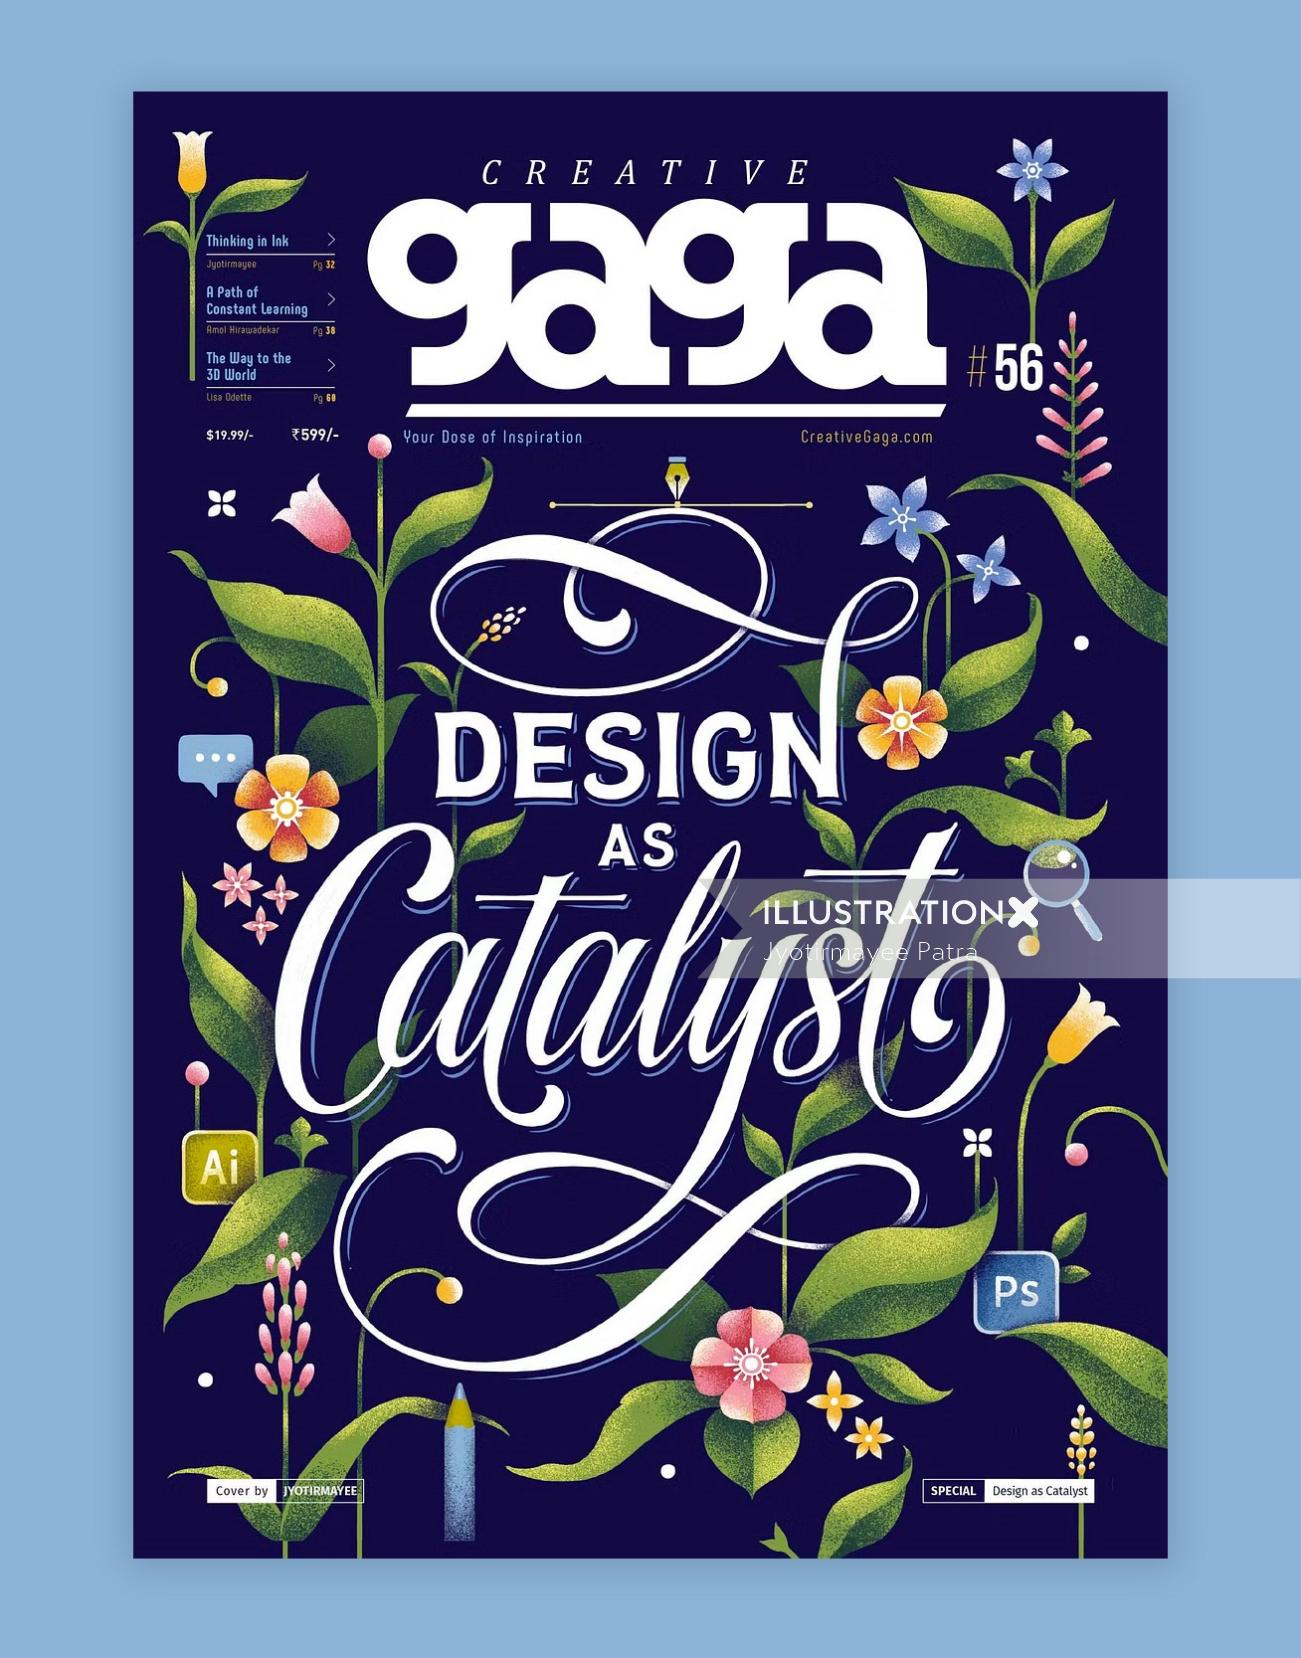 Creative Gaga magazine cover design